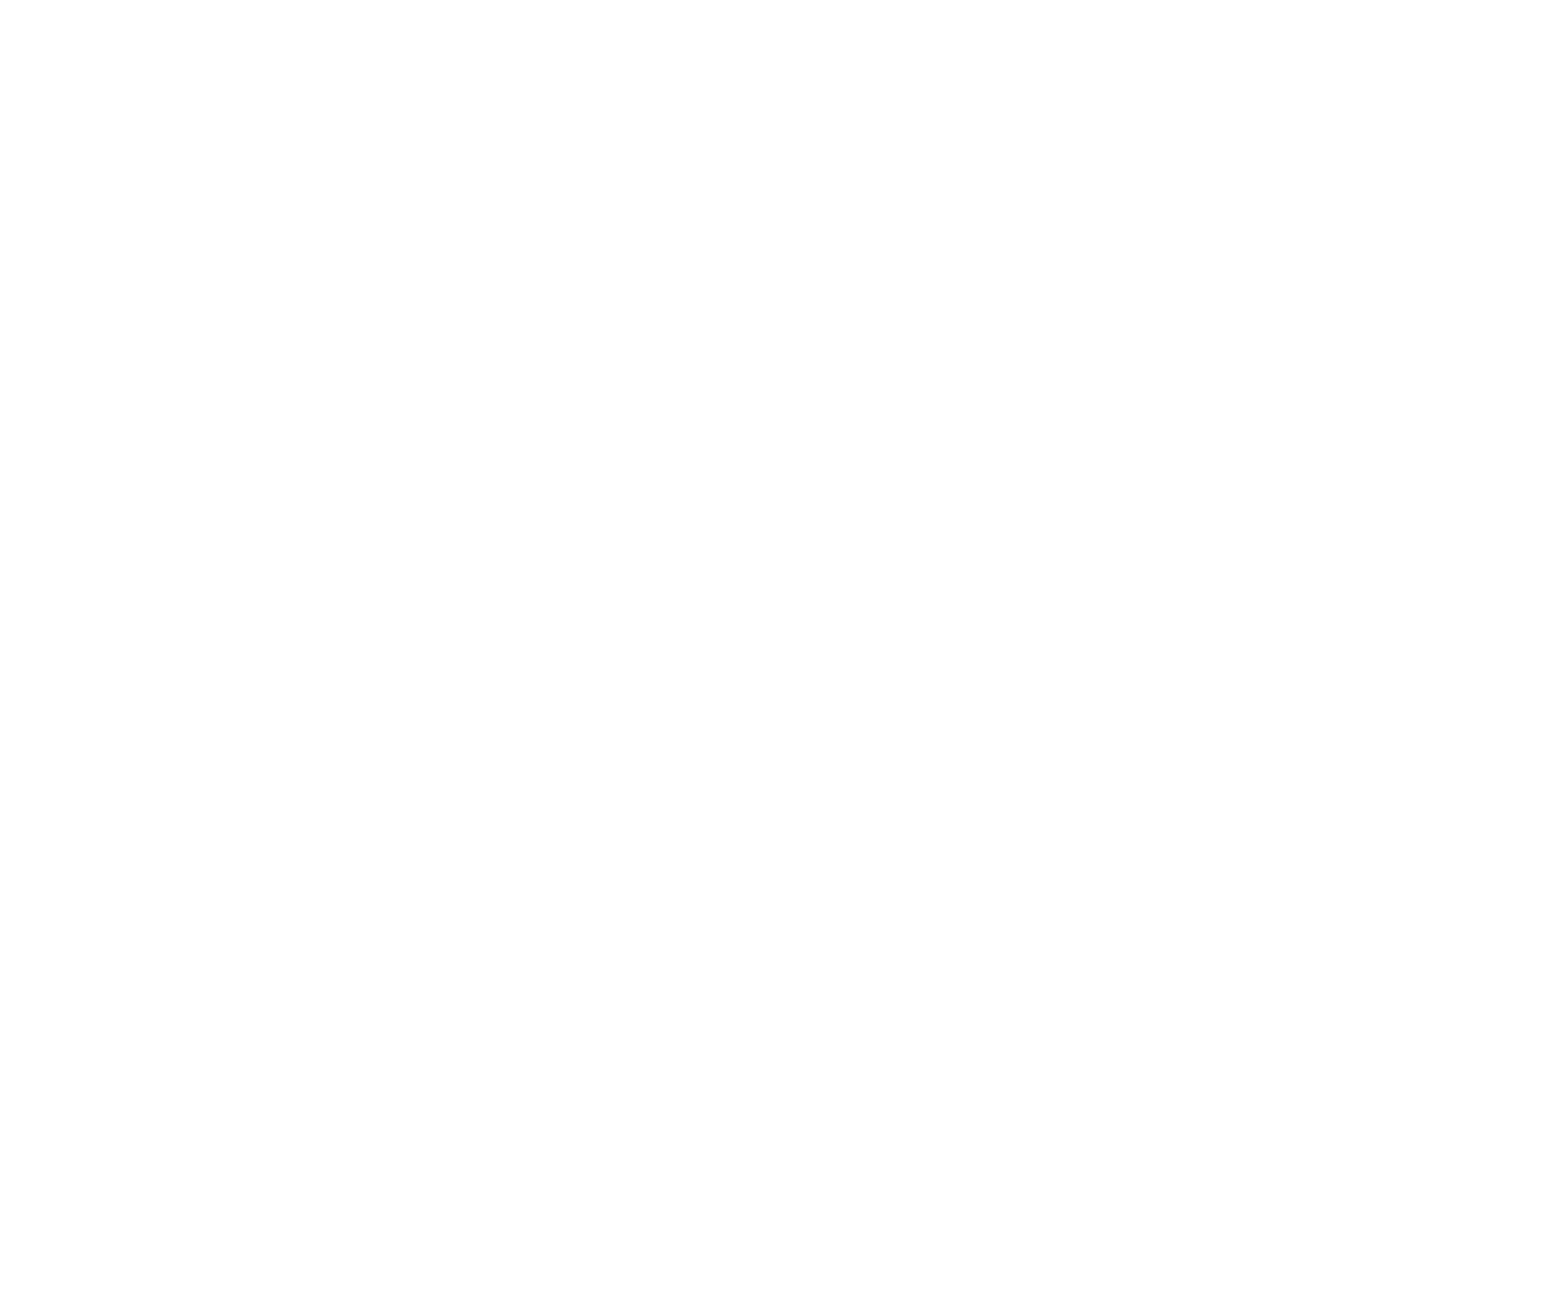 Emperor Watch & Jewellery logo for dark backgrounds (transparent PNG)